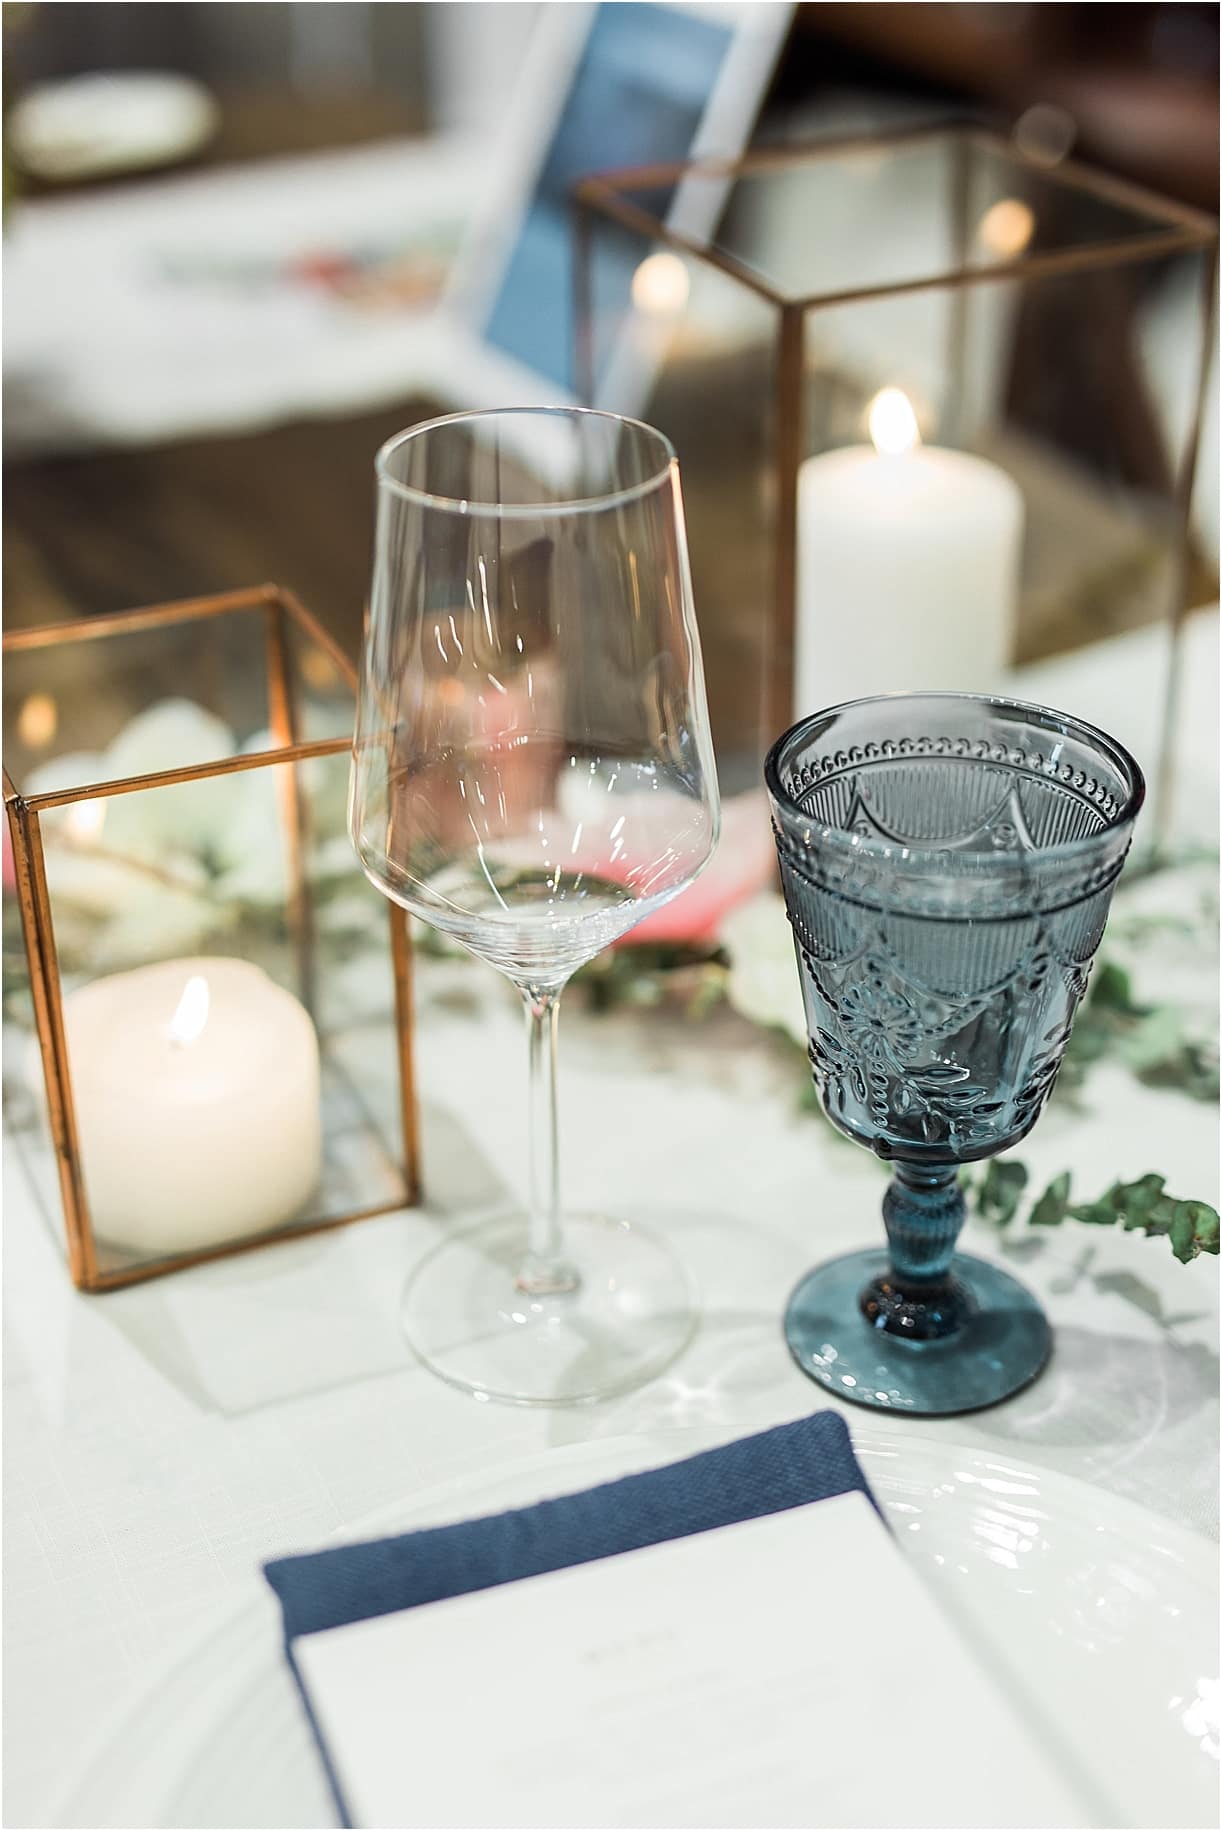 Simple High Impact Wedding Tabletop Ideas | Hill City Bride Wedding Blog